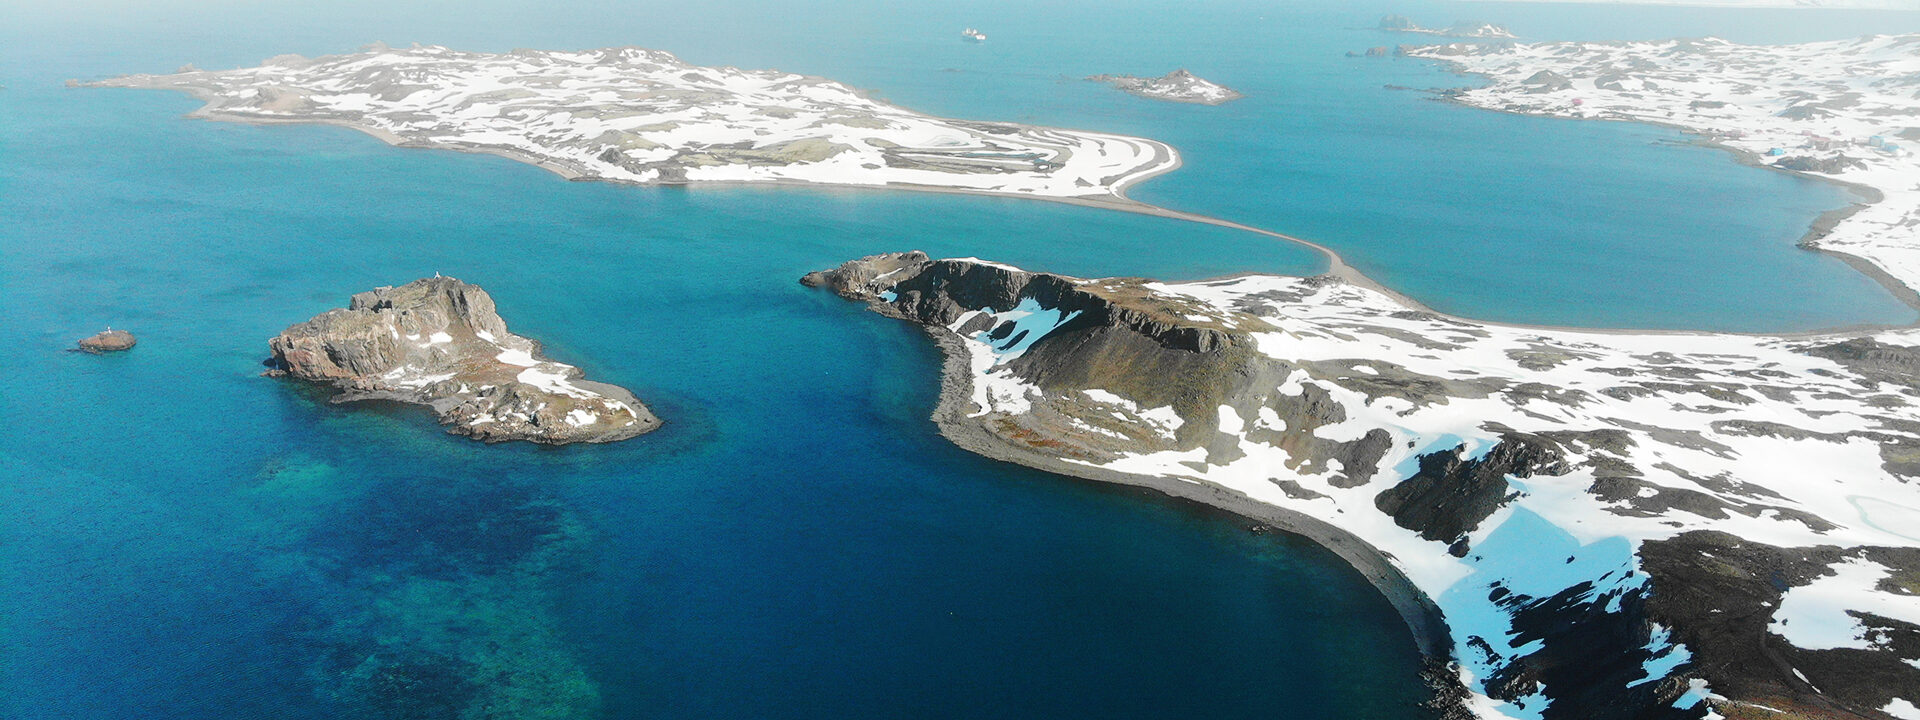 King George Island Aerial View